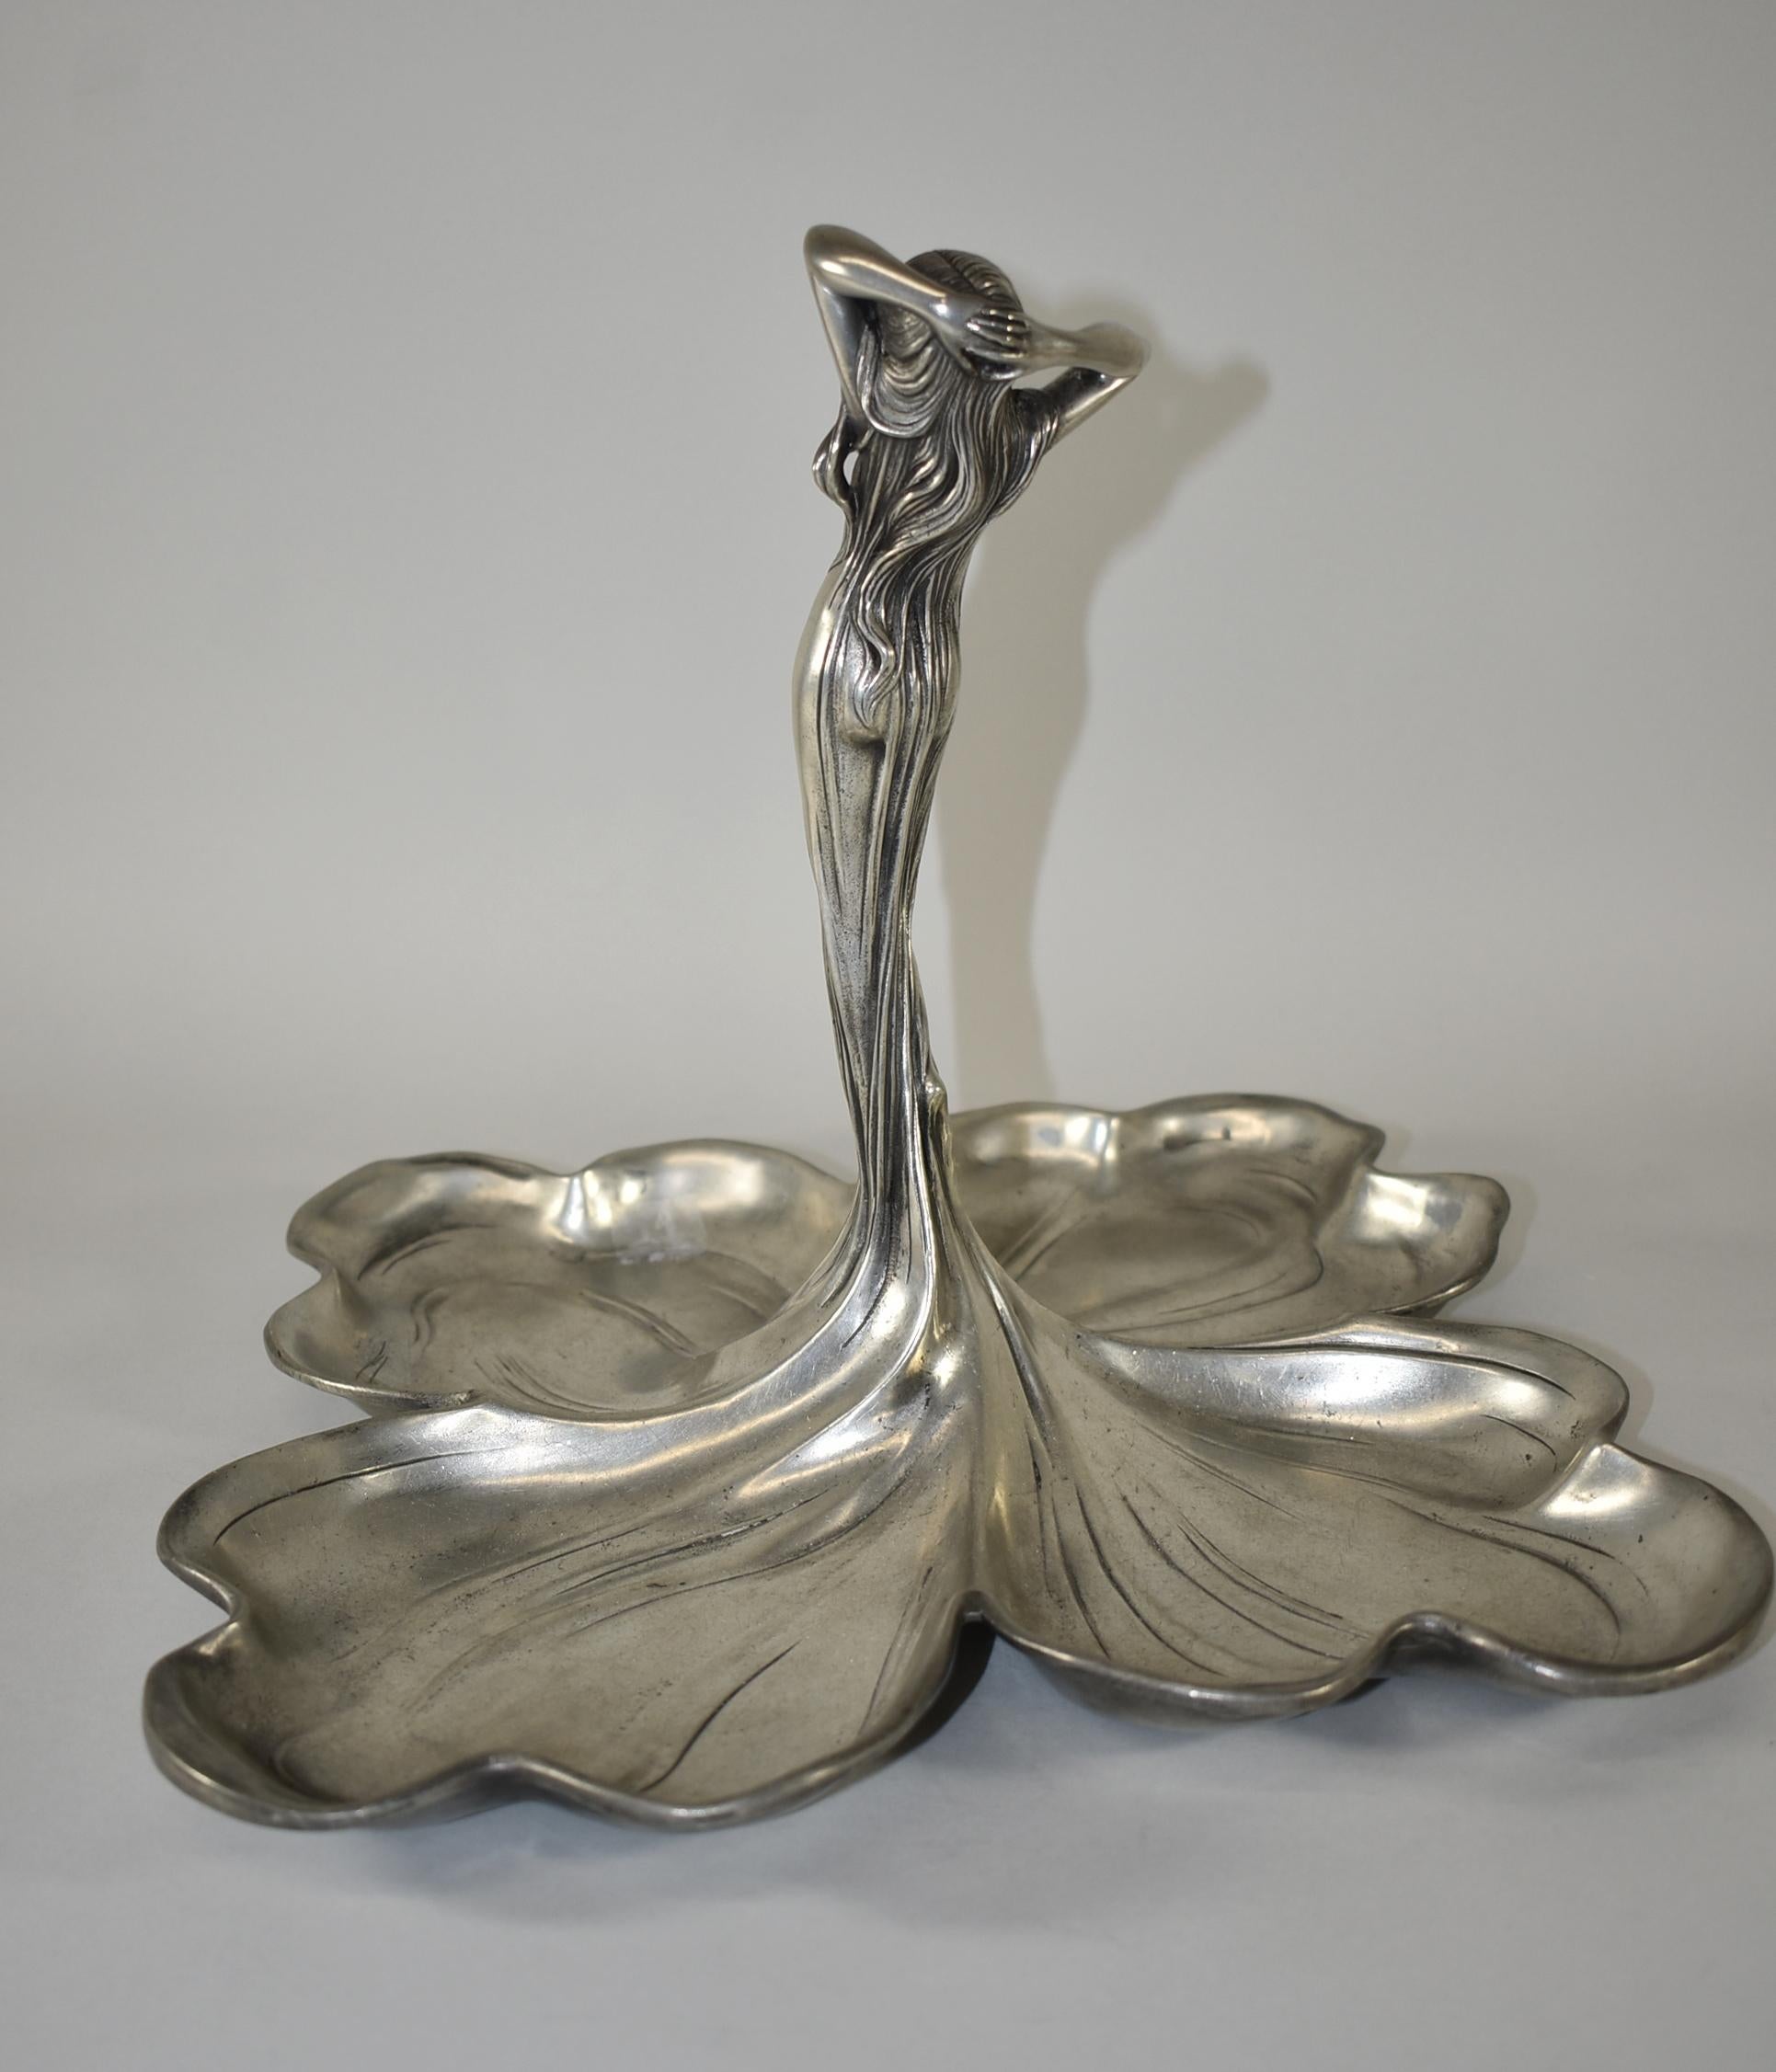 20th Century Art Nouveau Female Figure in Pewter with Quadruple Dish by Designer Albert Mayer